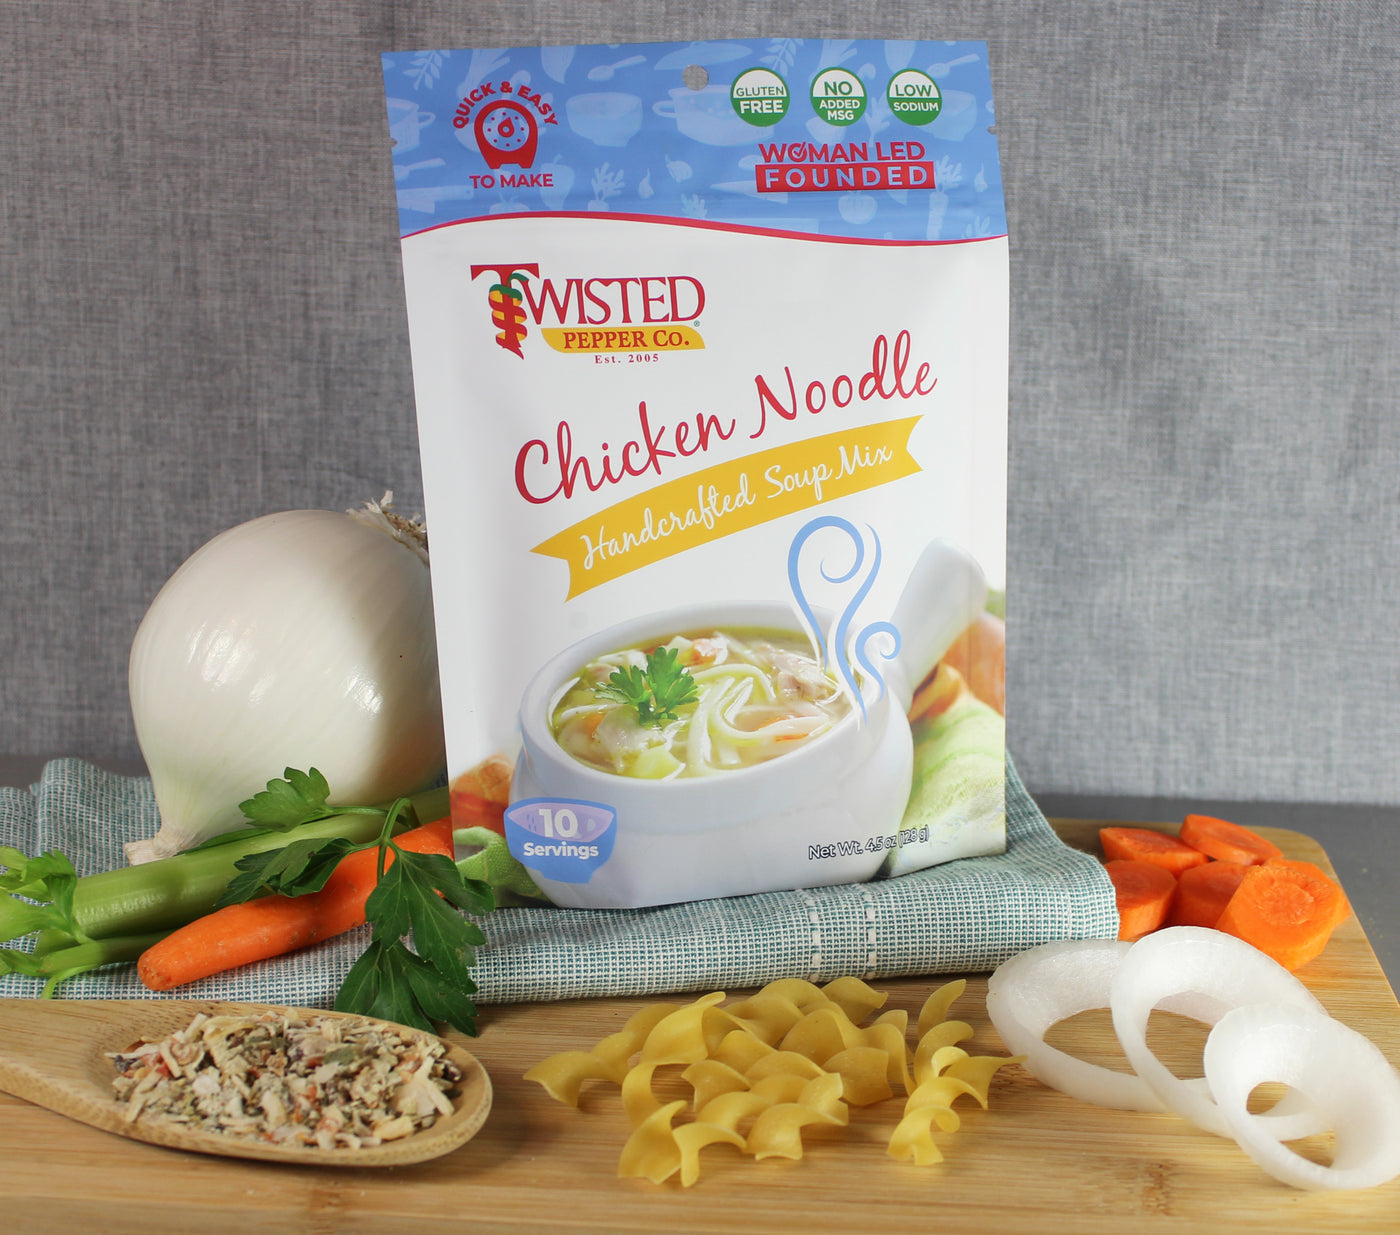 Chicken Noodle Dry Soup Mix